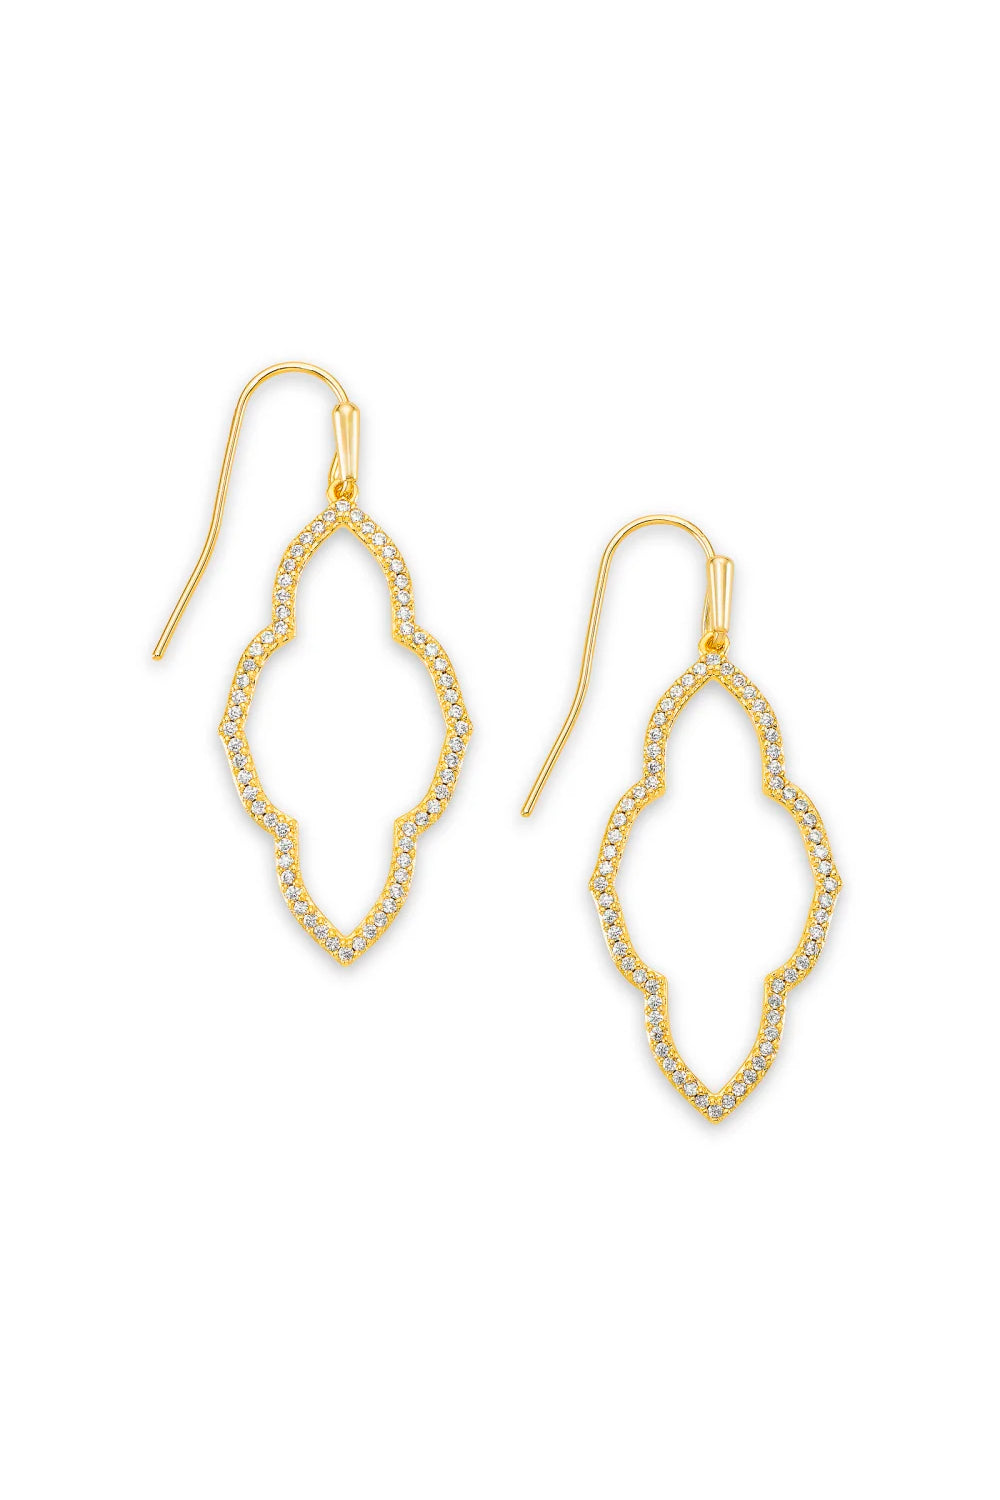 Kendra Scott: Abbie Gold Small Open Frame Earrings - White Crystal | Makk Fashions